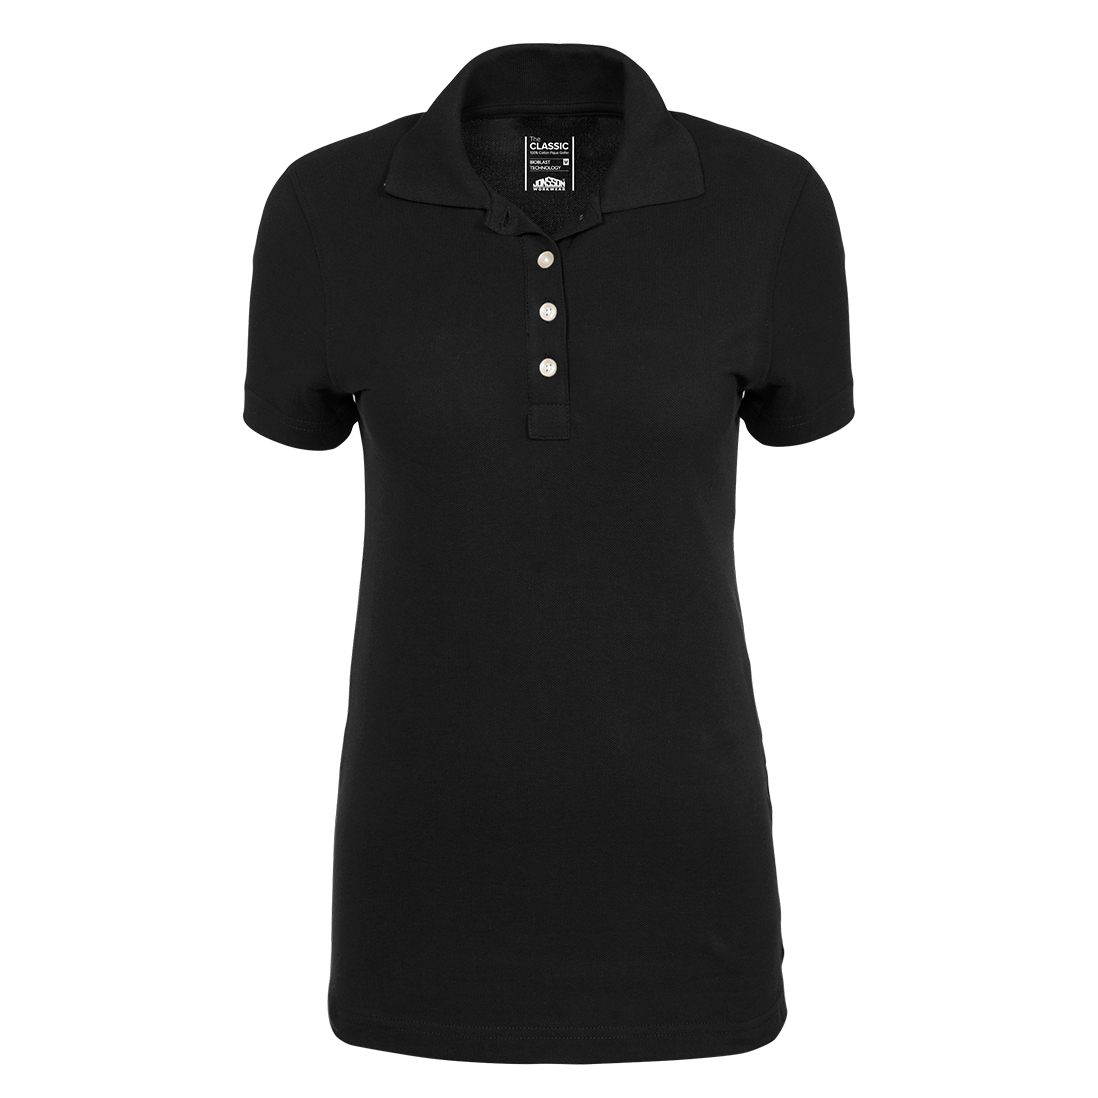 Jonsson Workwear | The Classic 100% Cotton Women’s Golfer